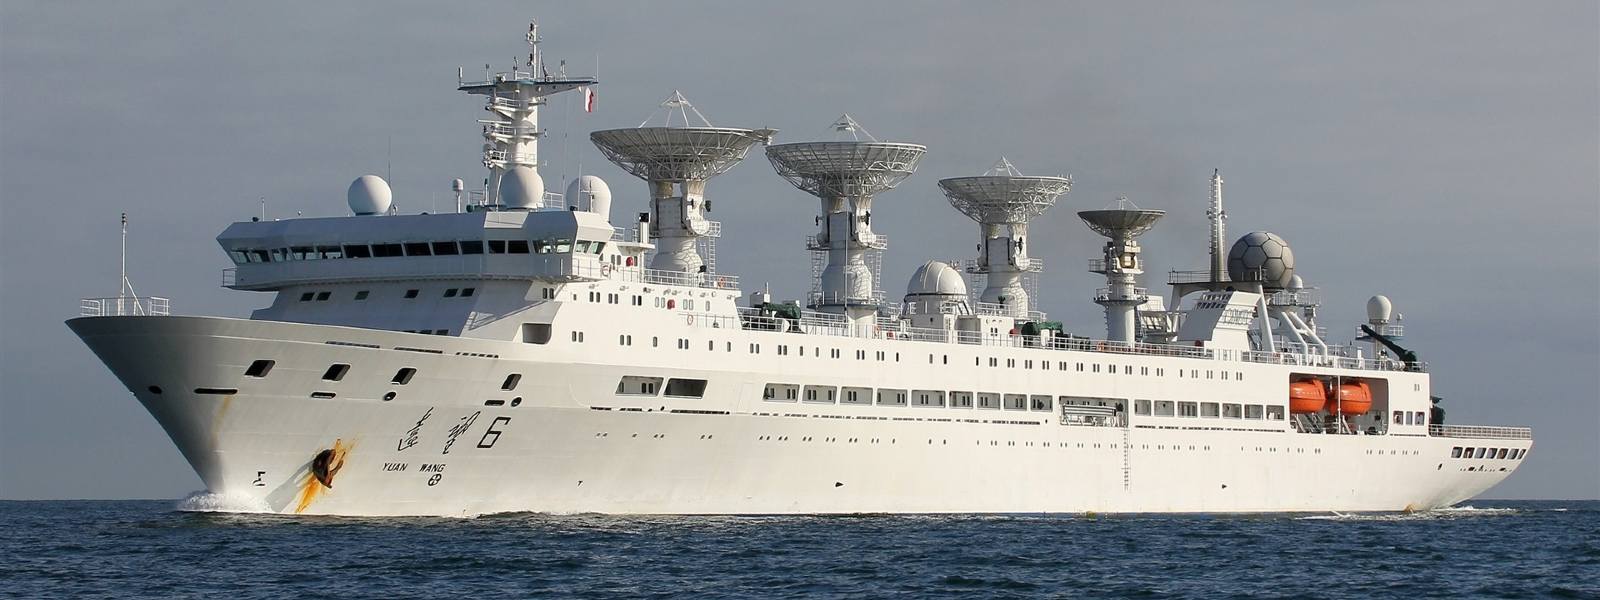 Chinese Research/Survey vessel Yuan Wang 5 enters the Sea of Sri Lanka